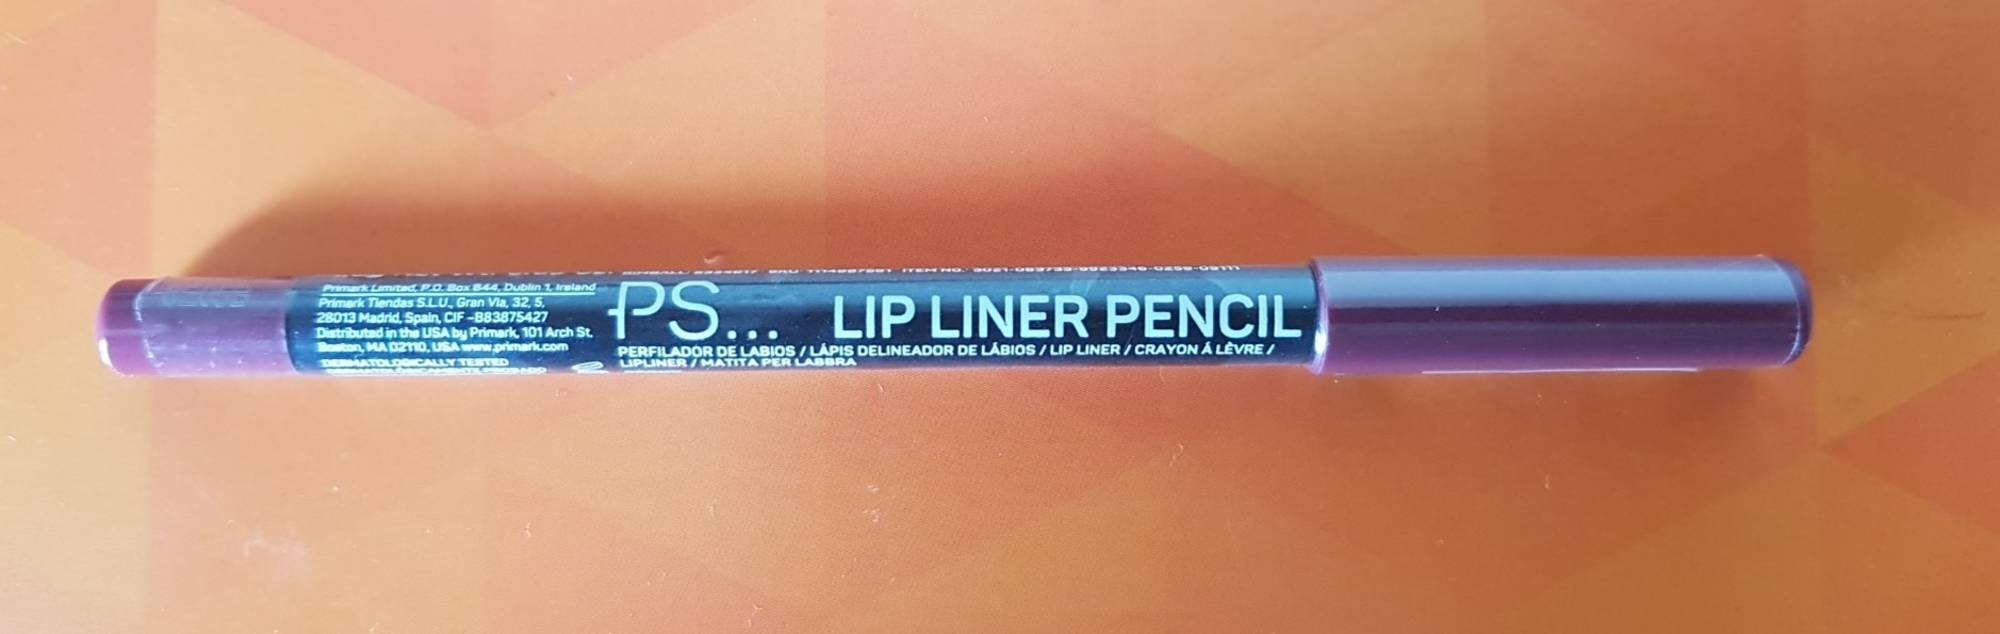 PRIMARK - PS... Lip liner pencil 